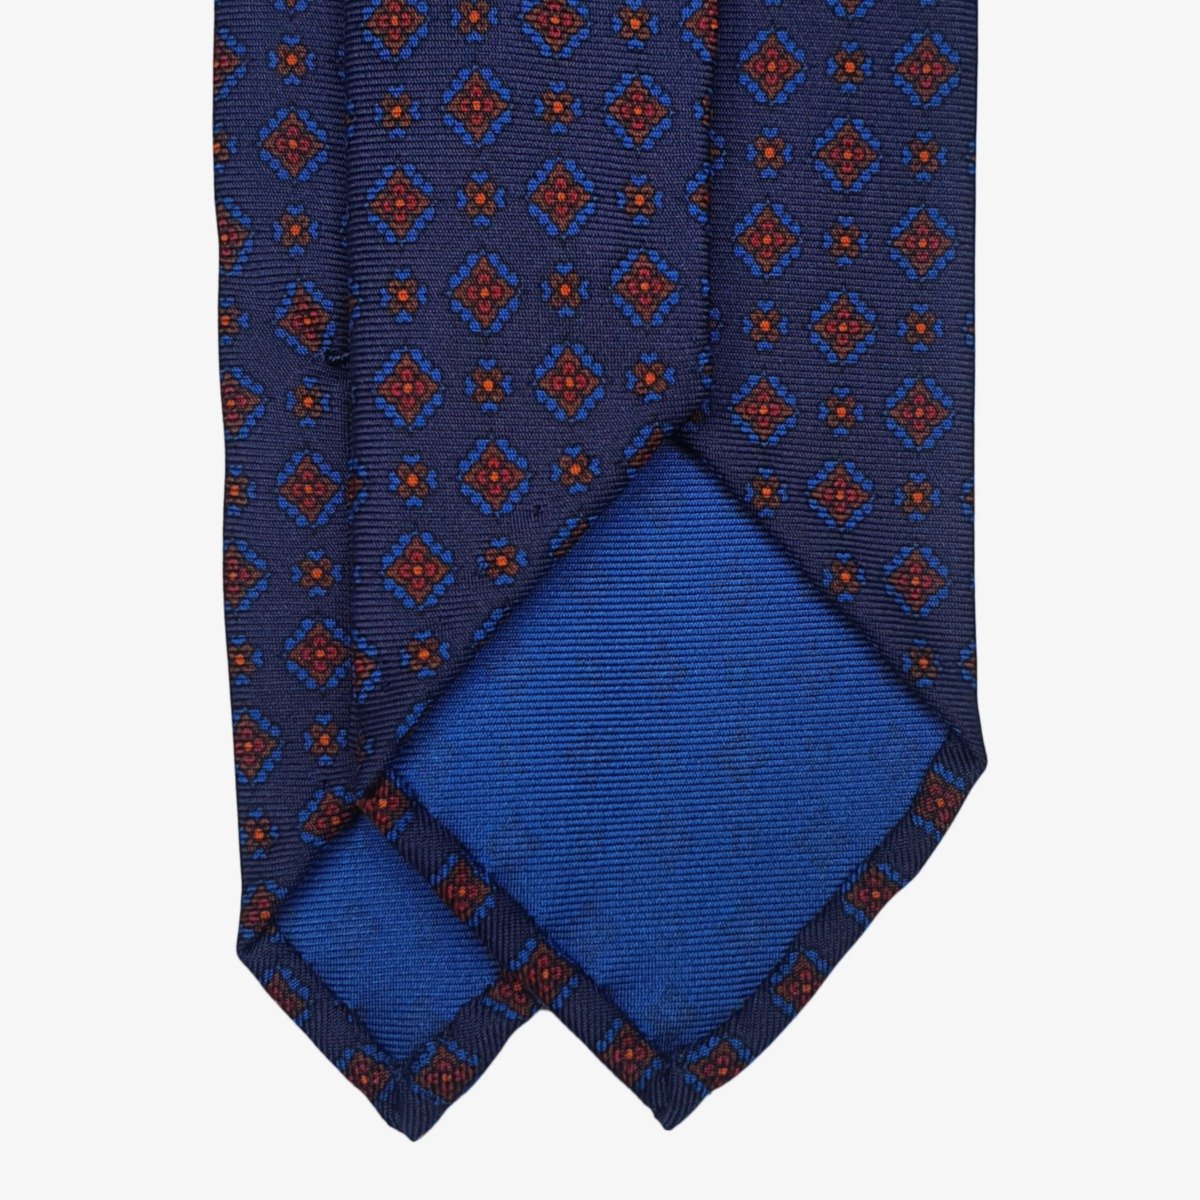 Shibumi Firenze navy ancient madder silk tie with orange flowers